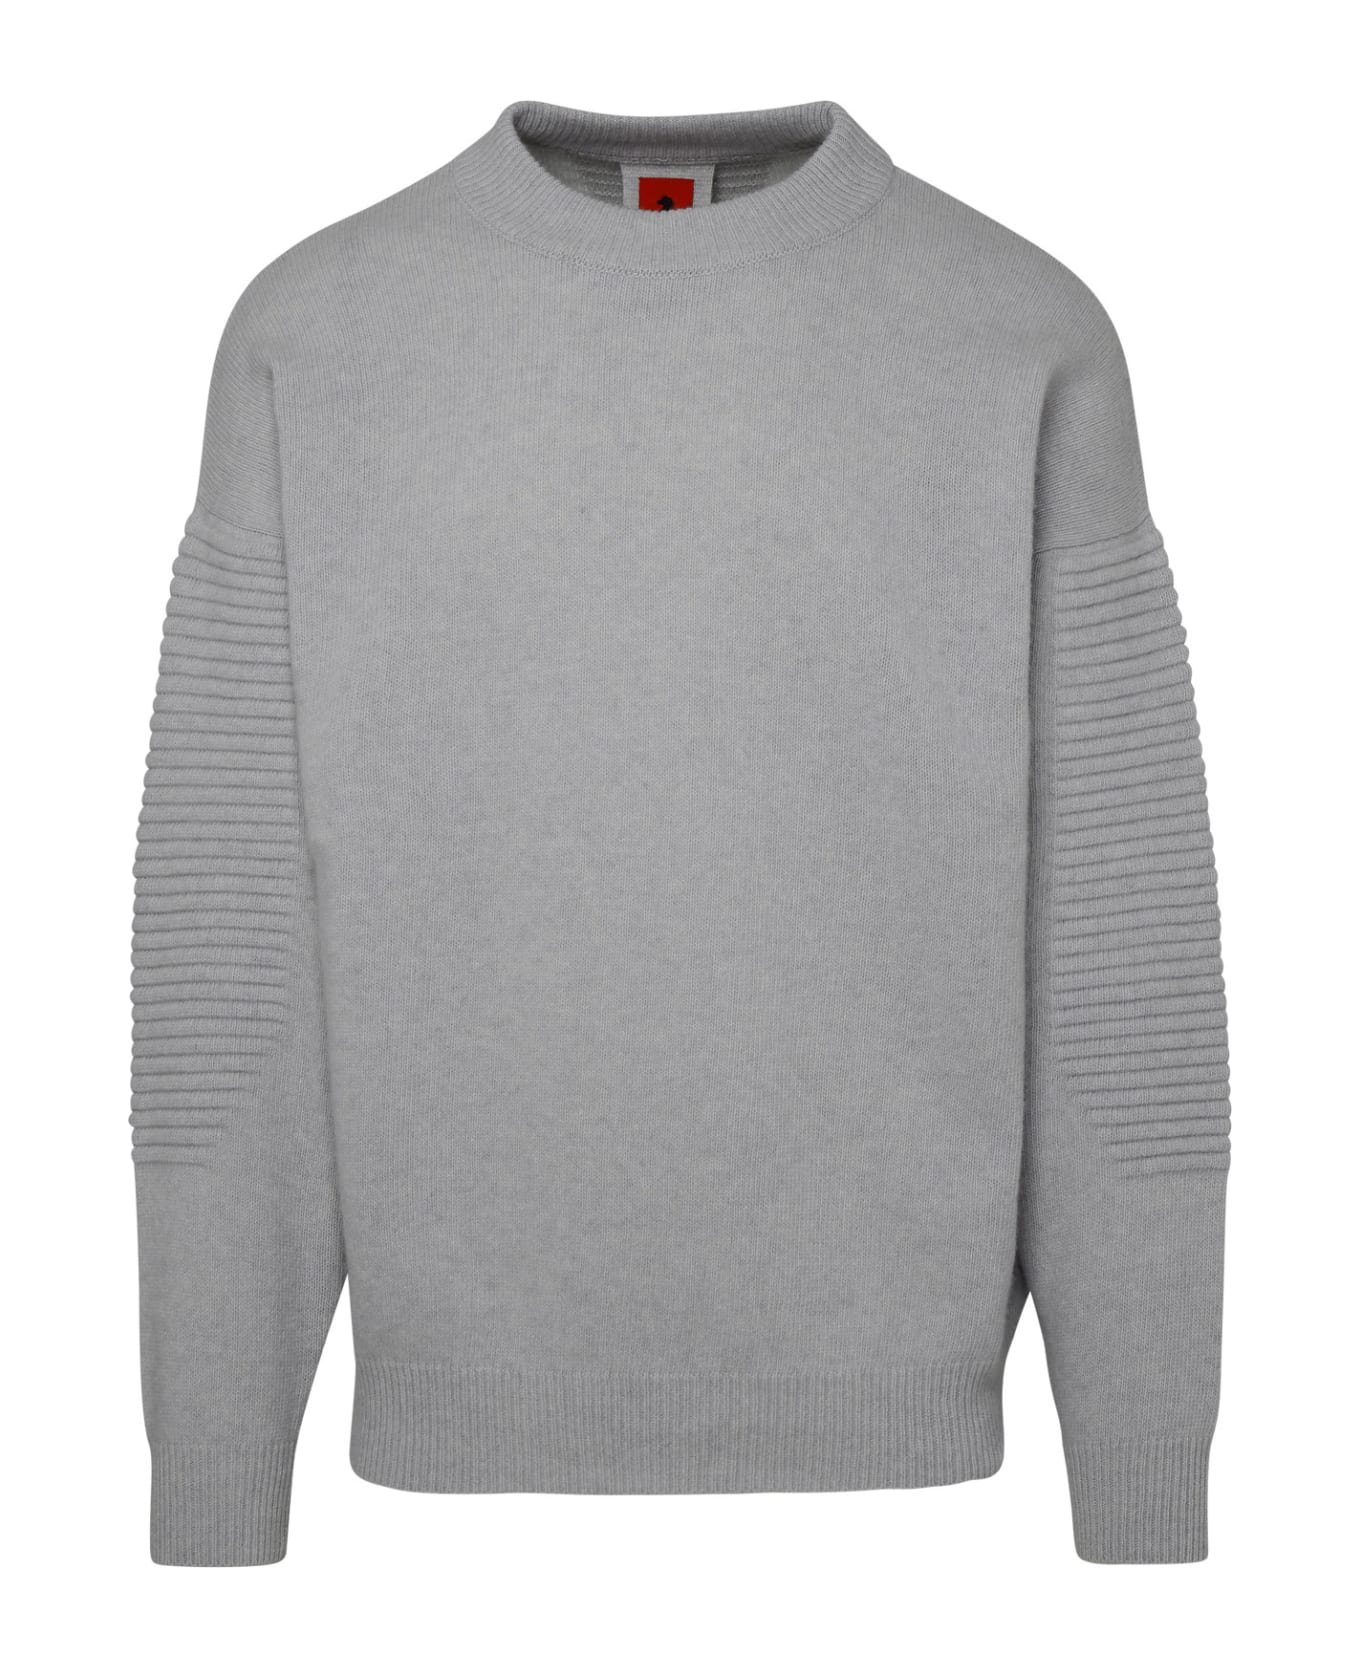 Ferrari Grey Cashmere Blend Sweater - Grey